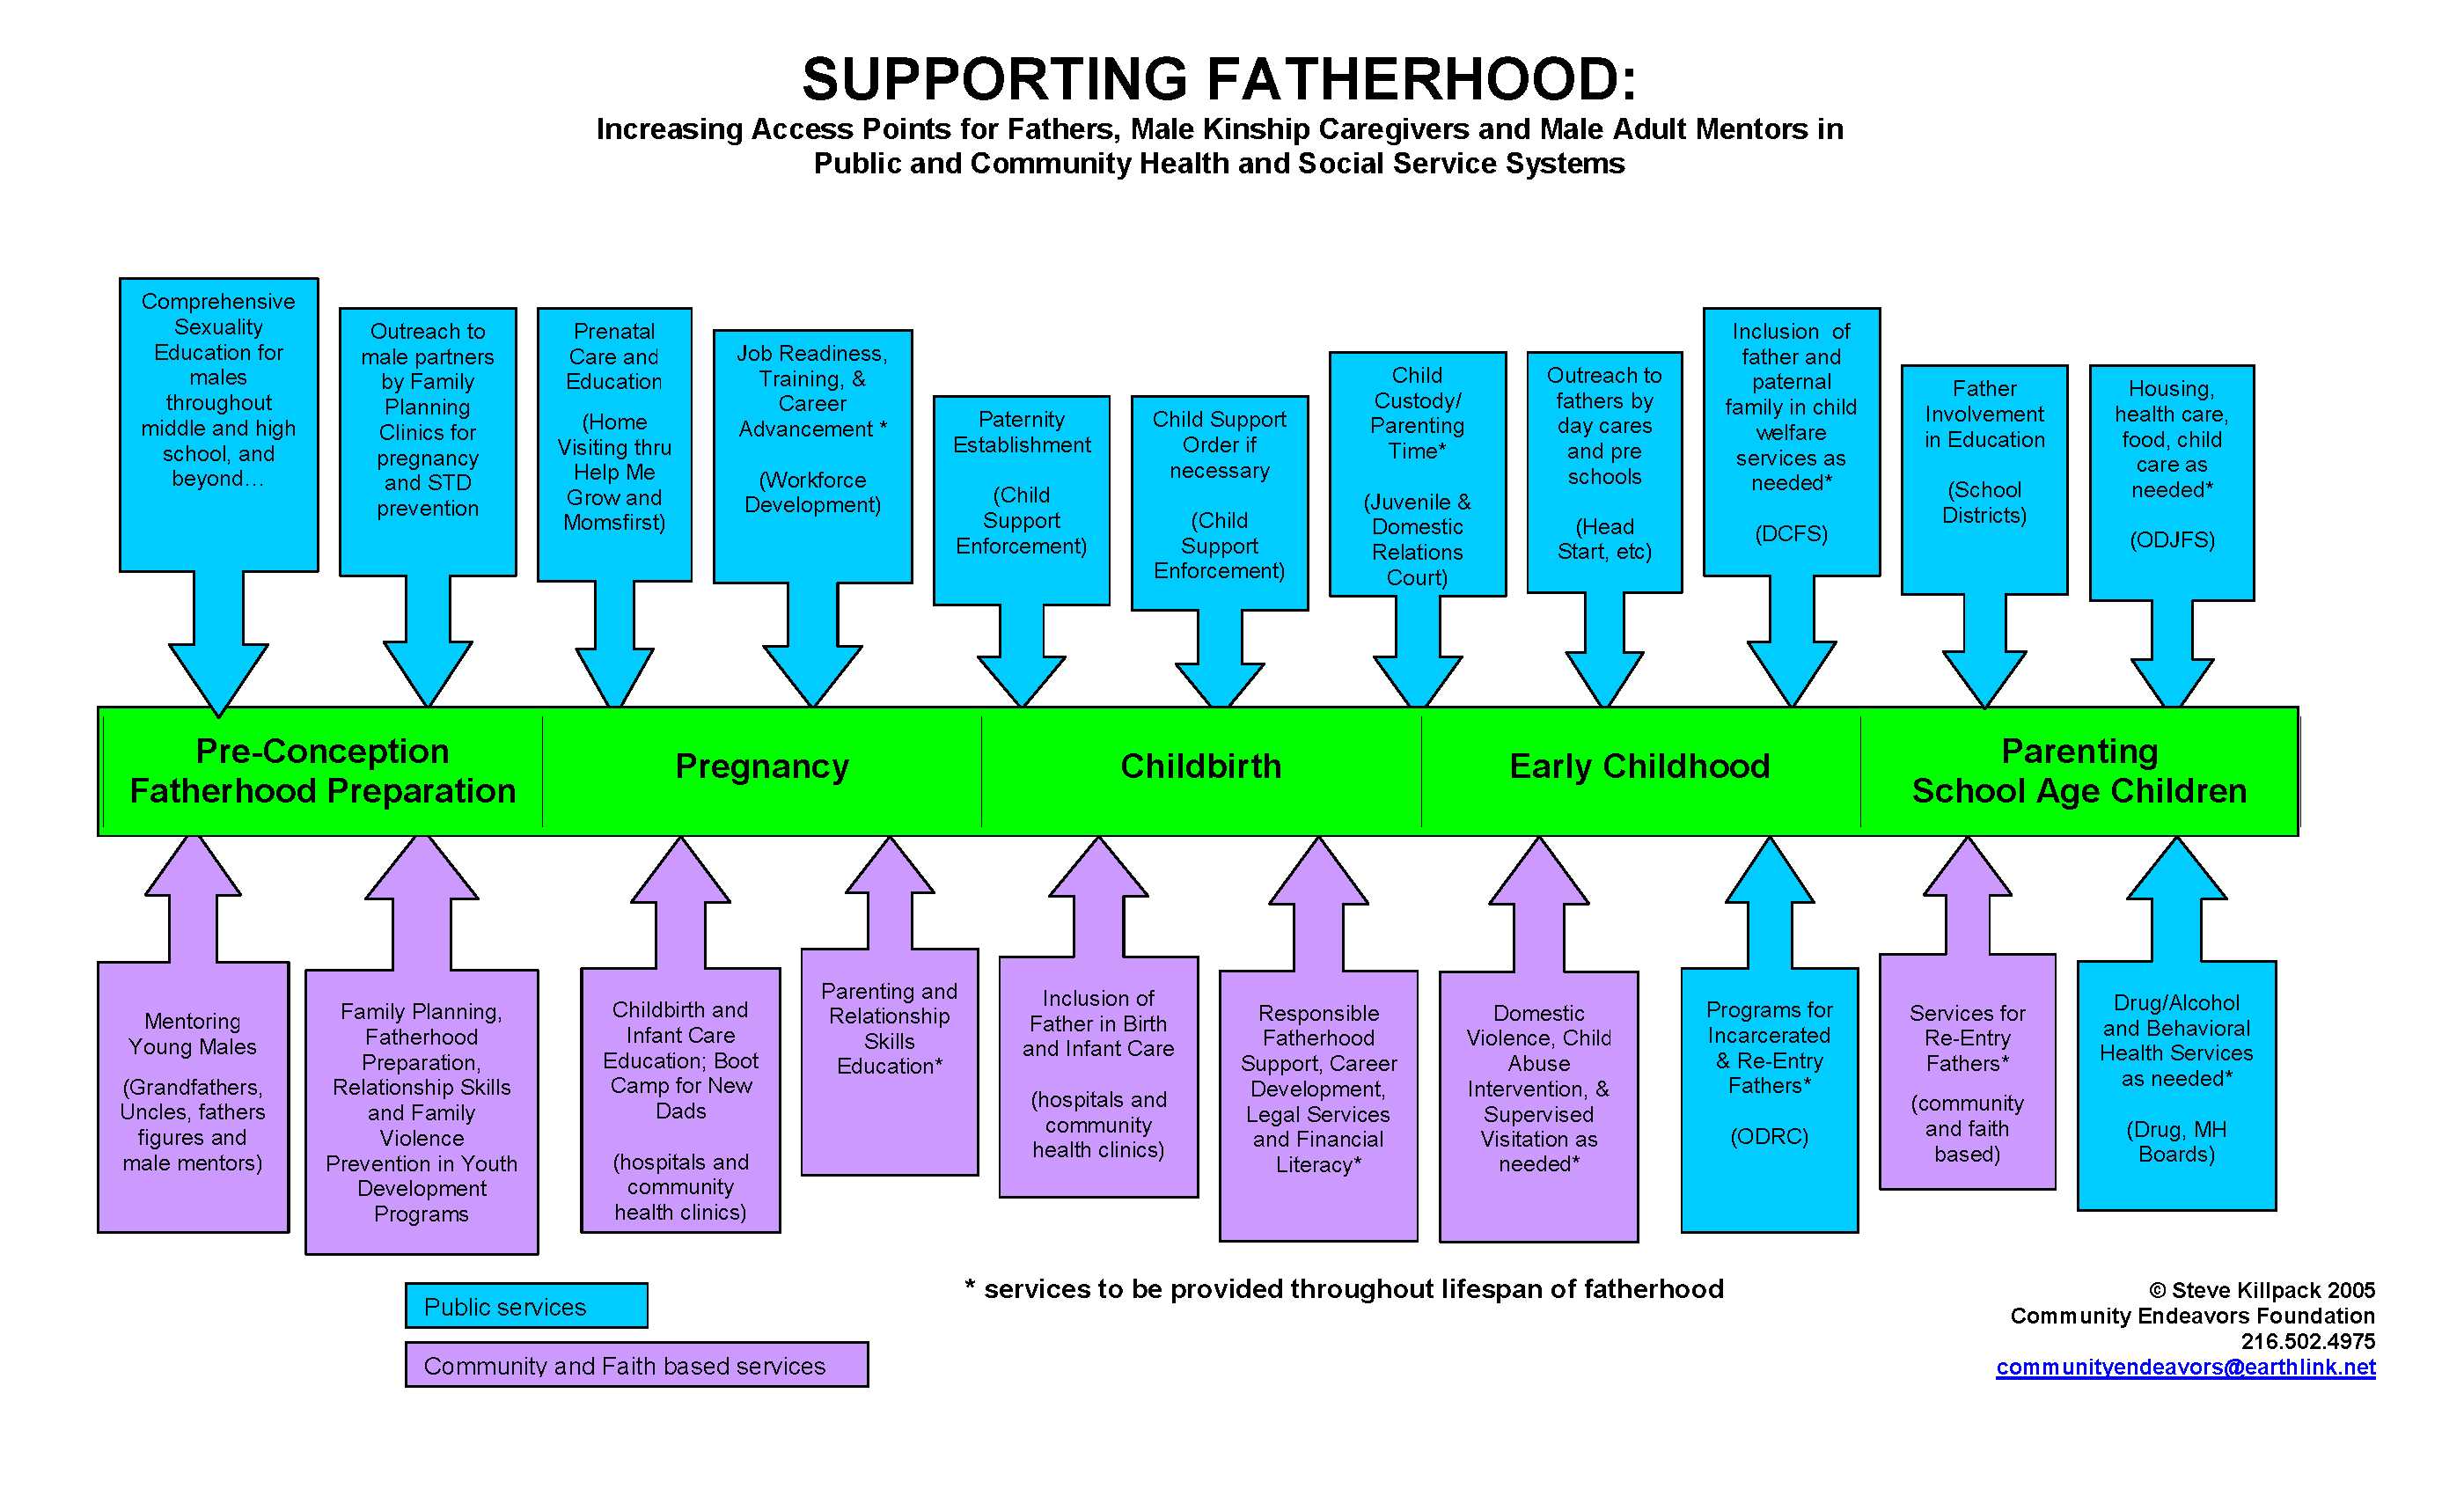 Lifespan of Fatherhood Service Model